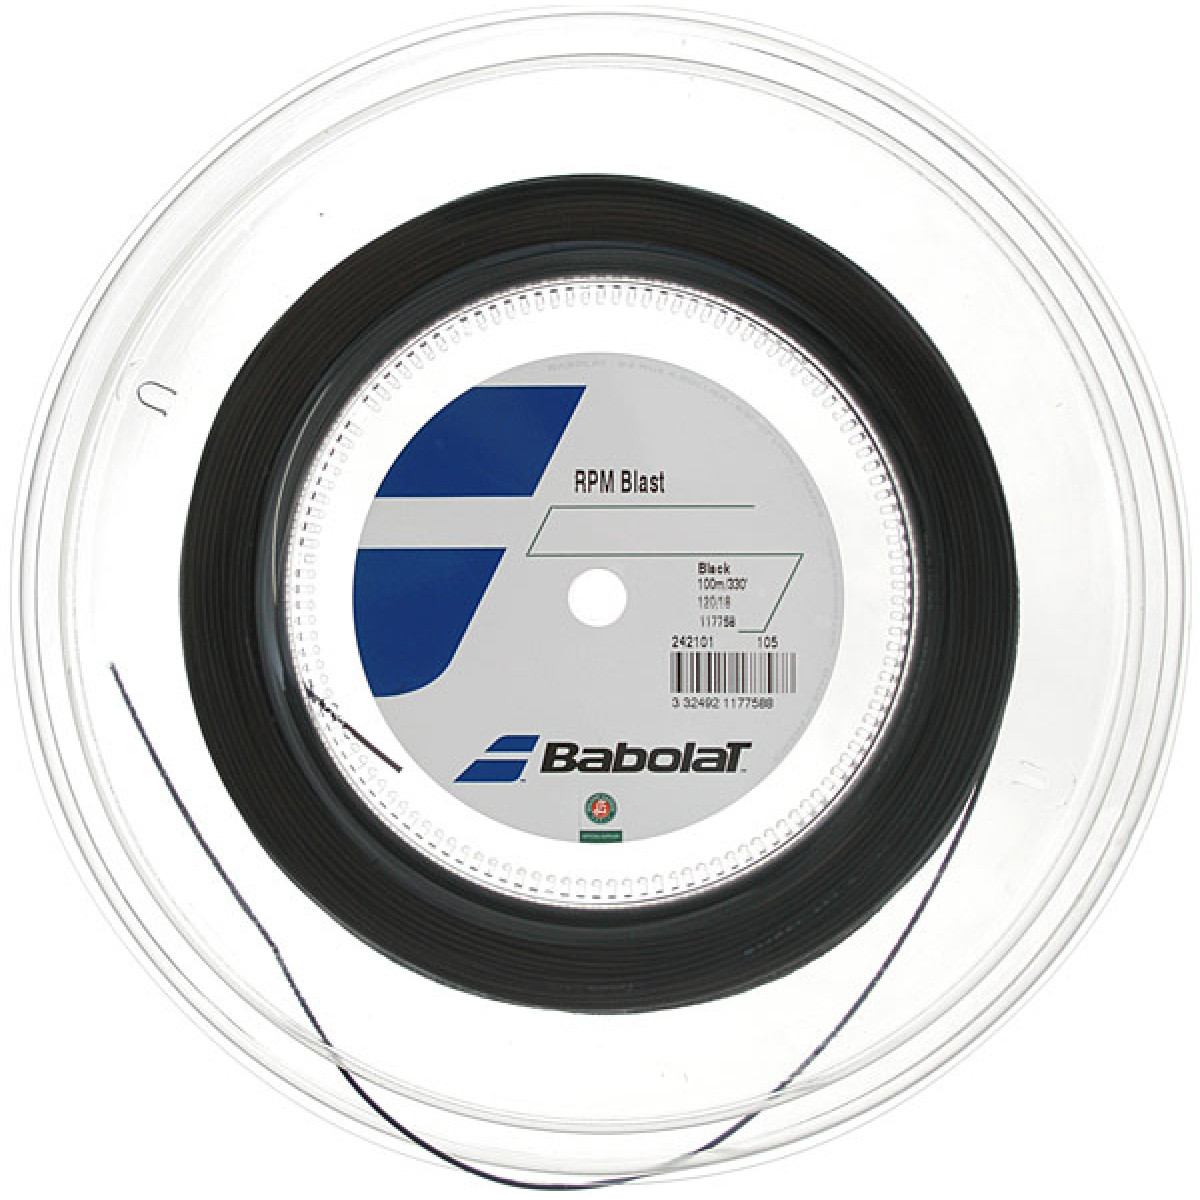 Babolat RPM Blast 100 m Tennis Reel String Black